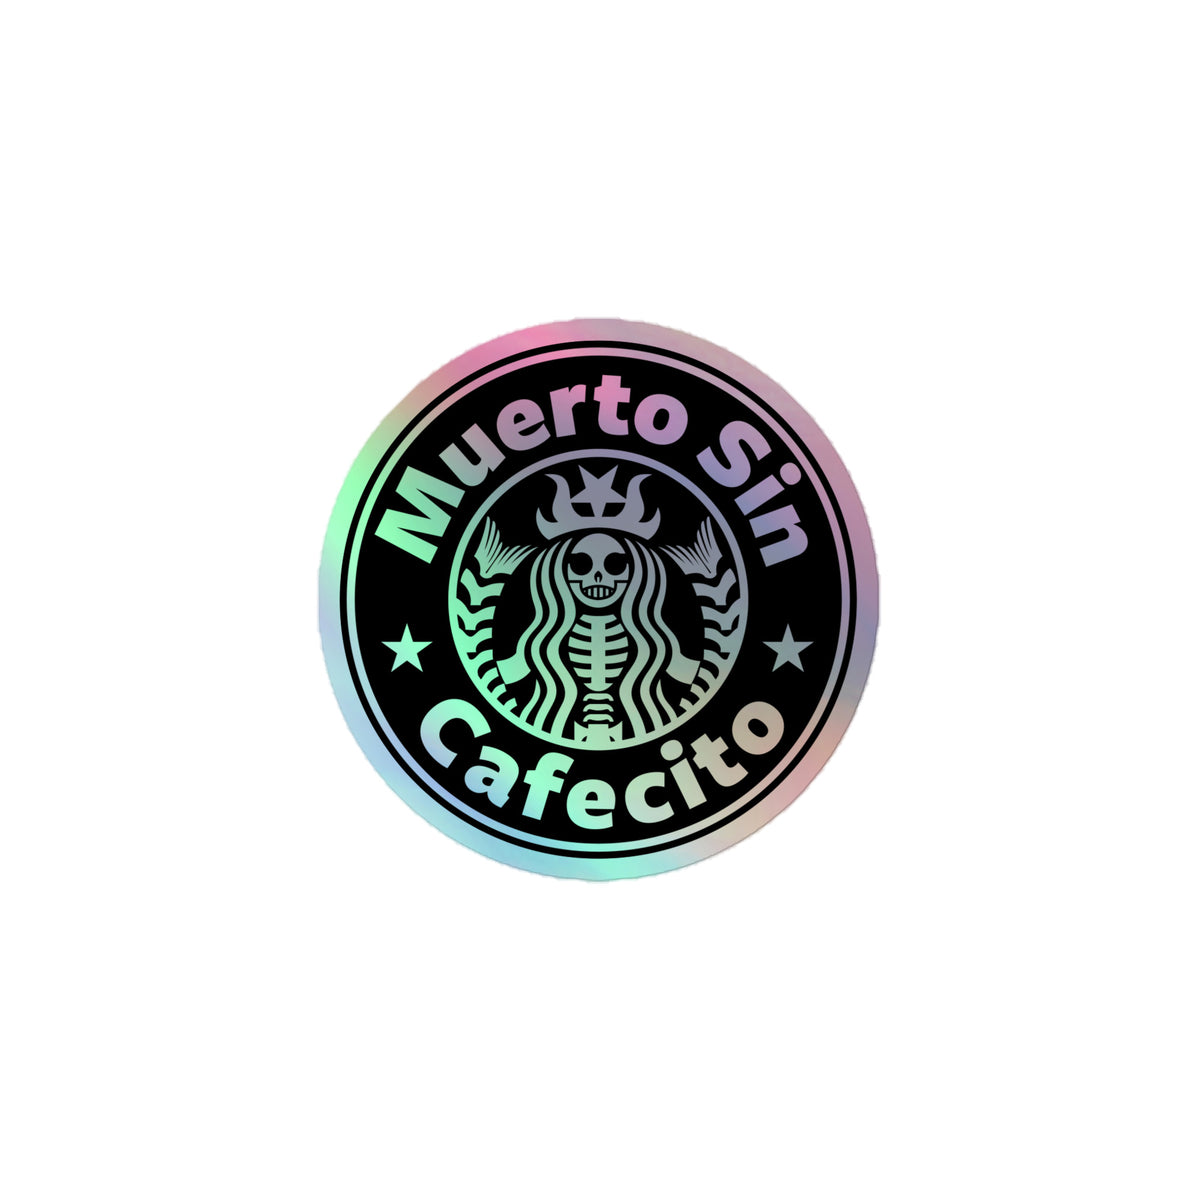 Muerto Sin Cafecito Holographic stickers